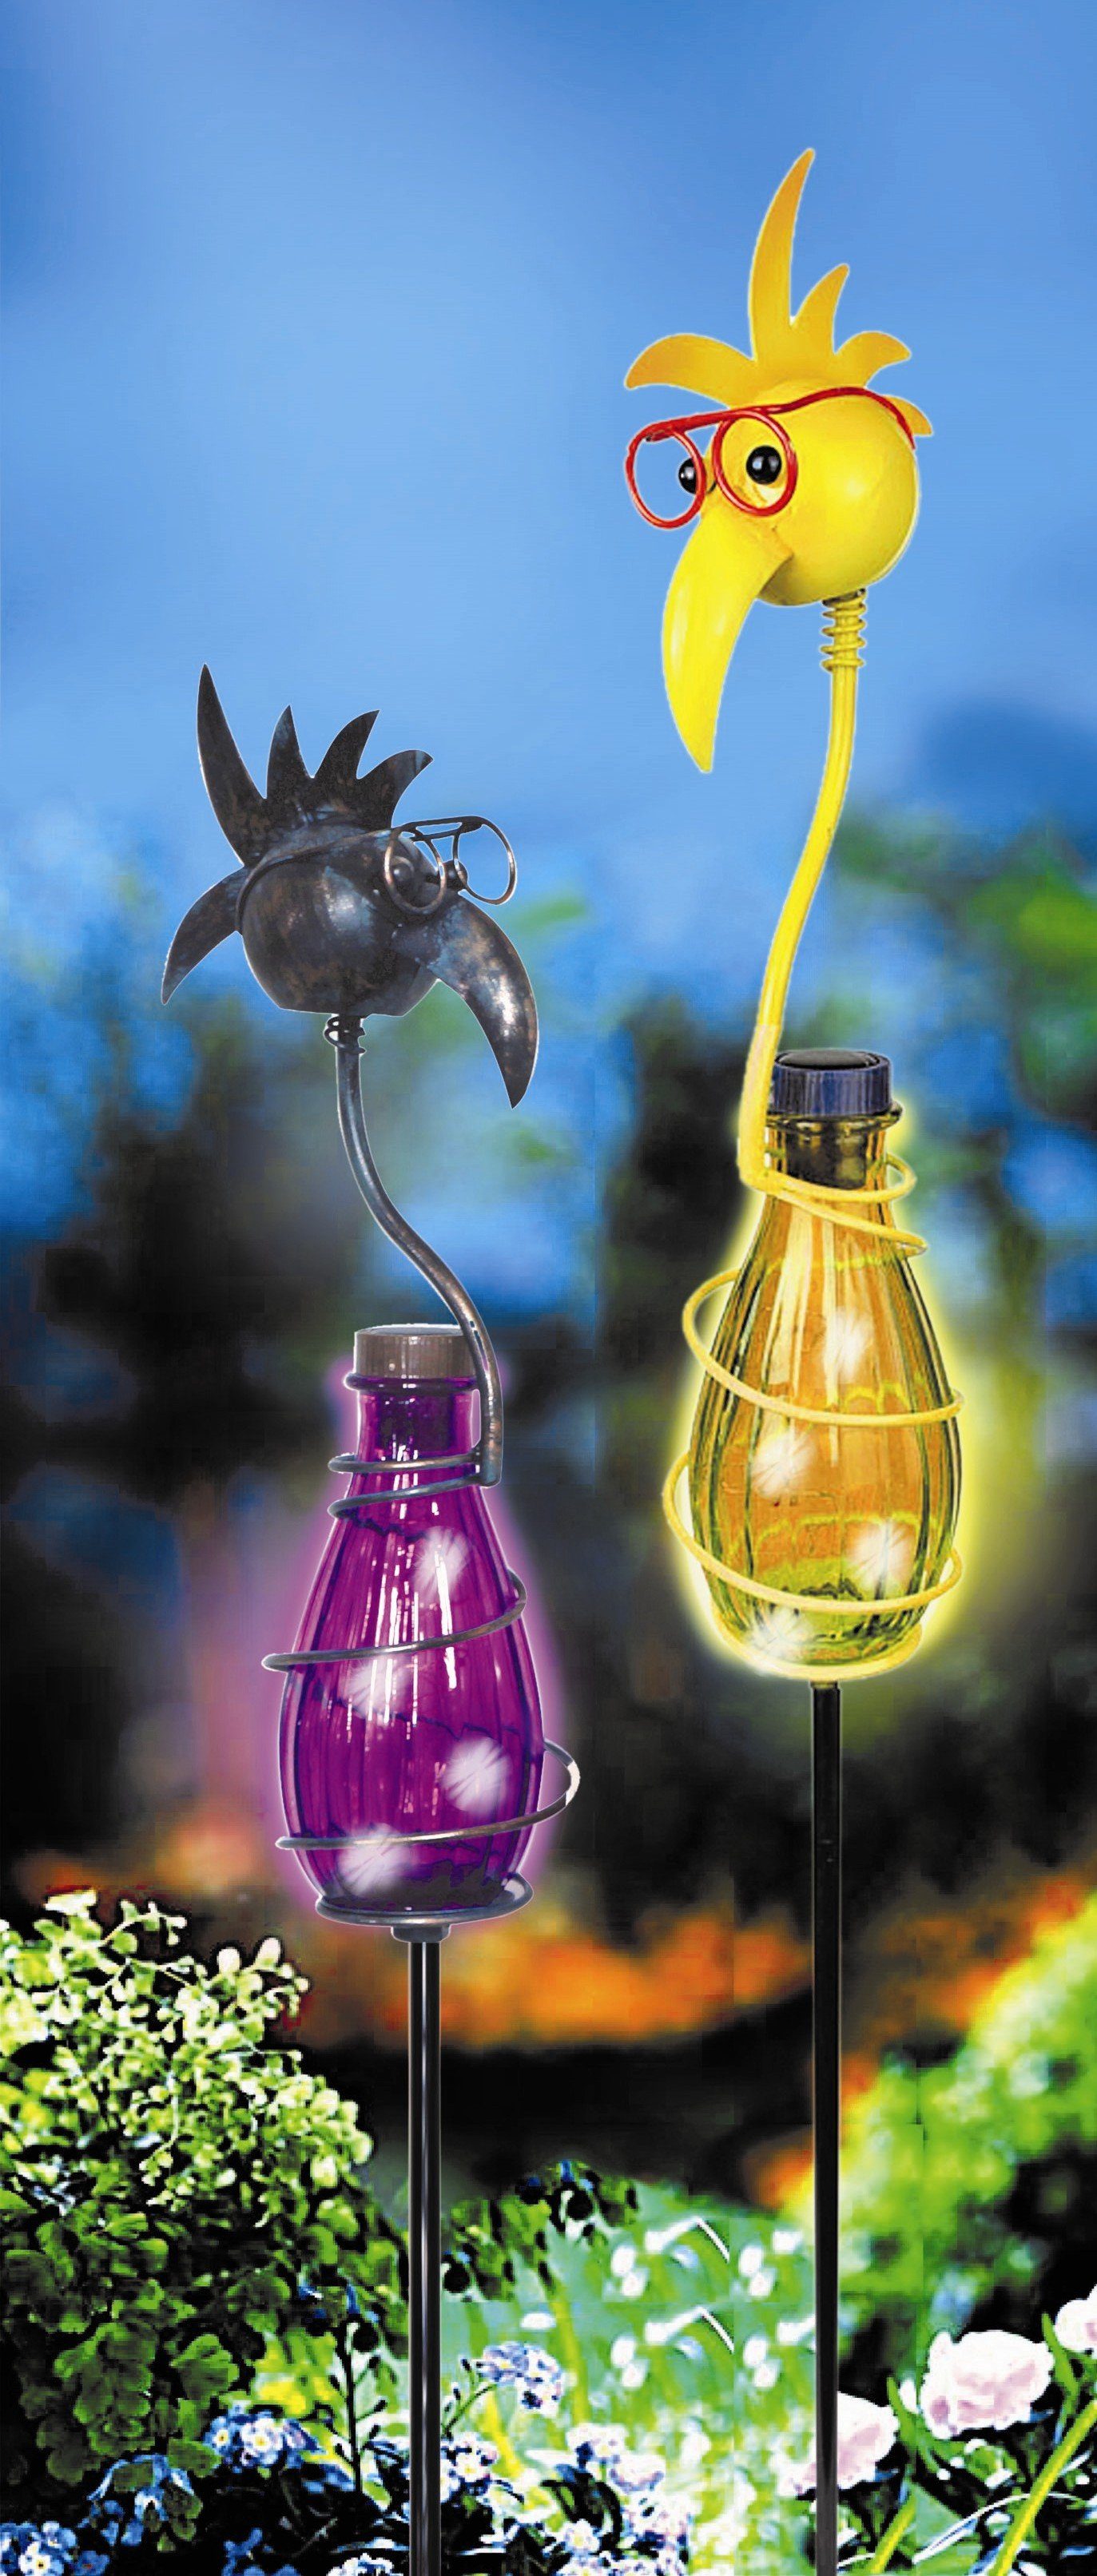 fest international LED Solar LED JOKA Stableuchte Bird", Dekofigur gelb, integriert "Crazy